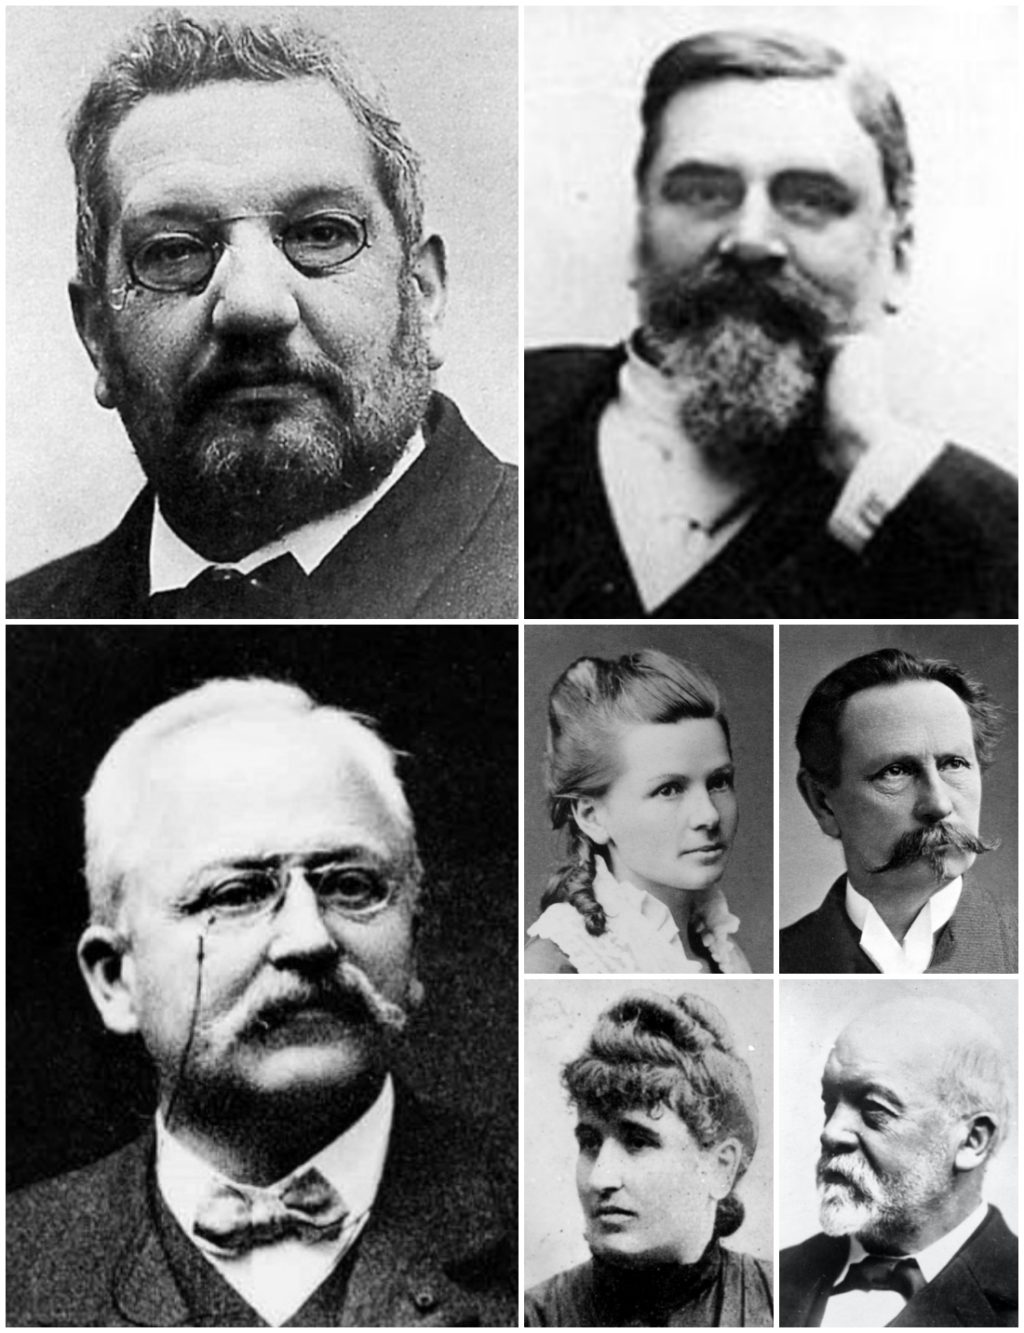 René Panhard, Émile Levassor, Armand Peugeot, Bertha Benz, Carl Benz, Louise Sarazin y Gottlieb Daimler